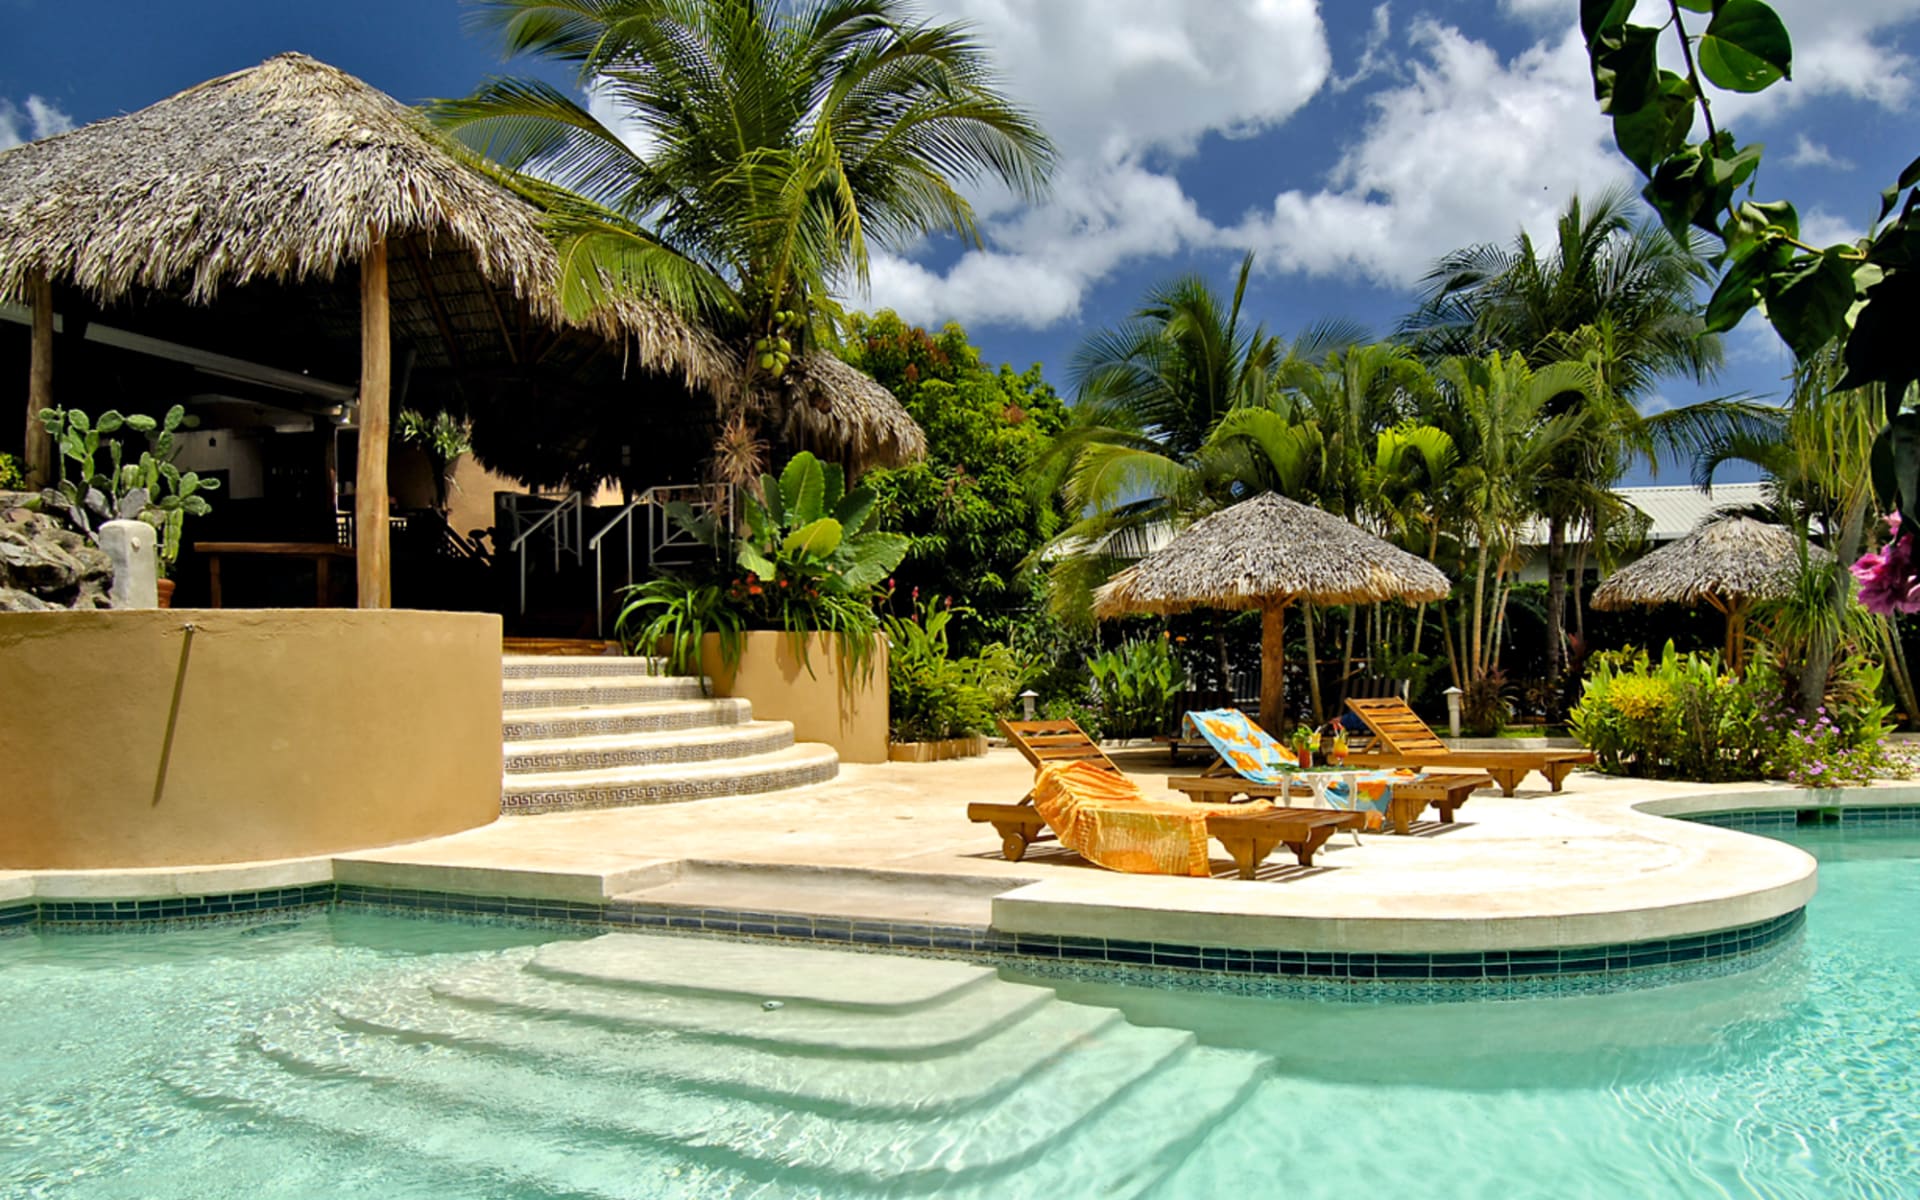 Jardin del Eden in Playa Tamarindo: pool jardin del eden pool liegen hütte